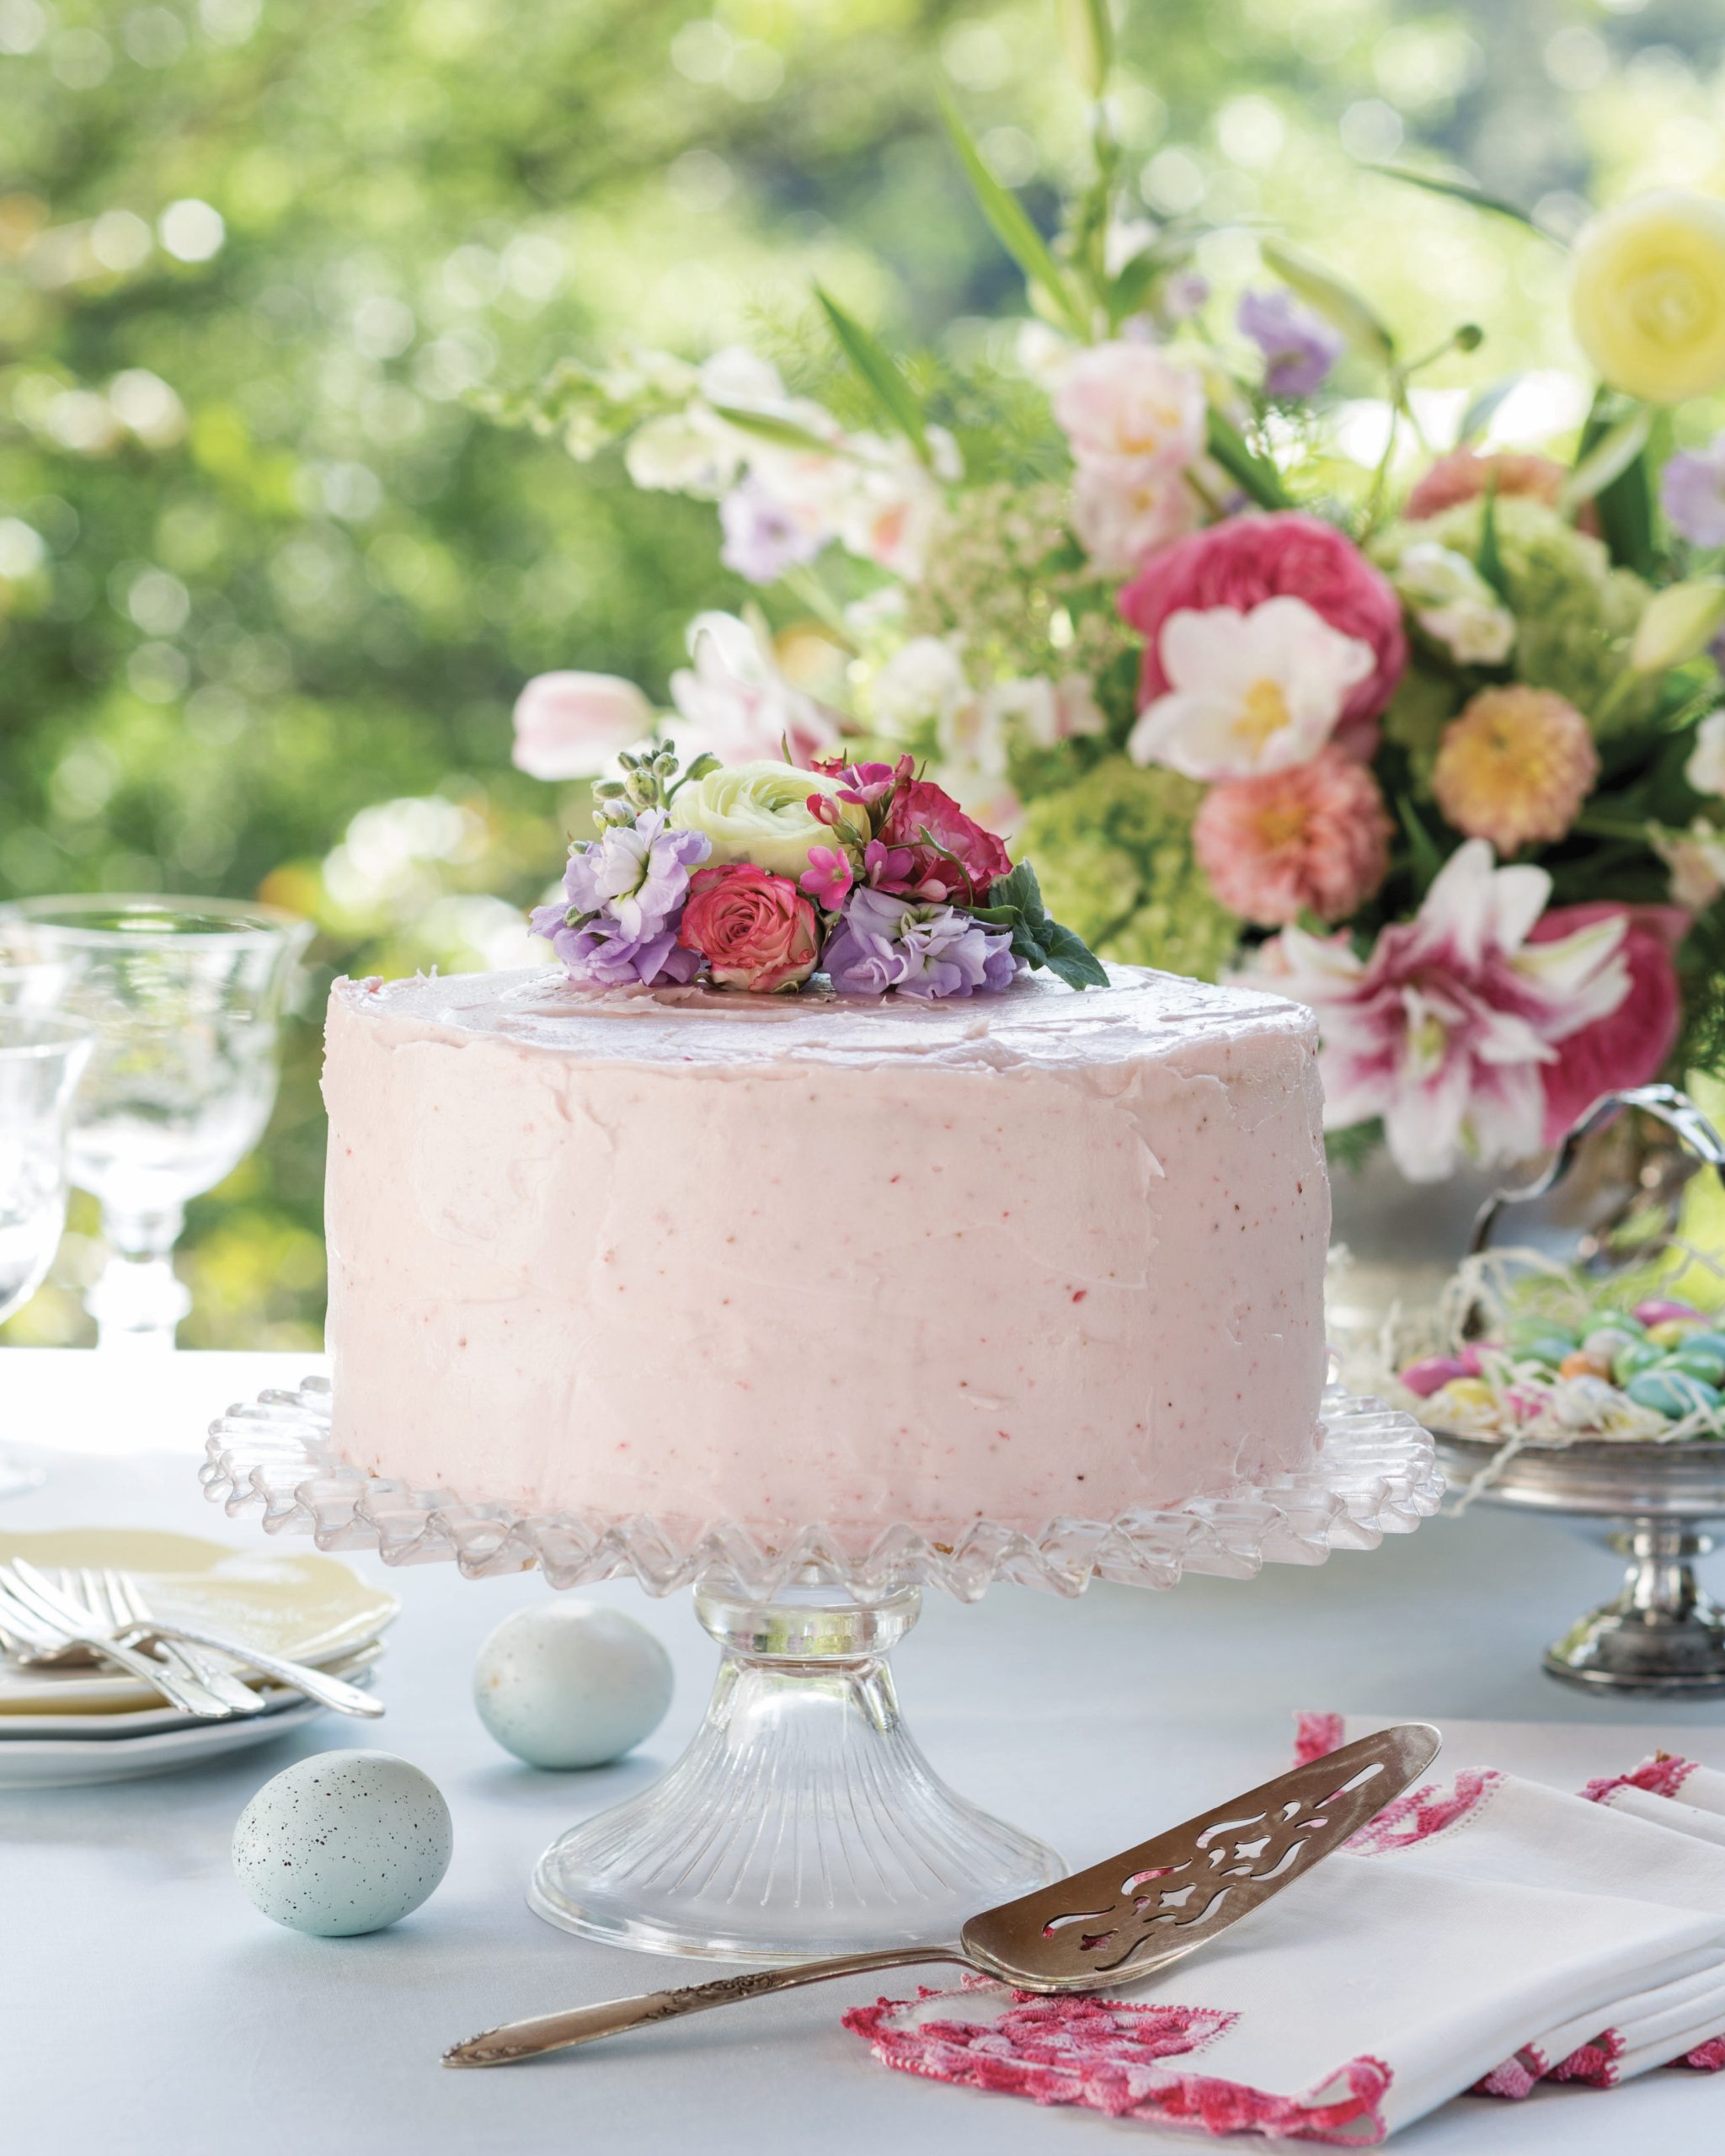 Springtime Strawberry Cake with flowers